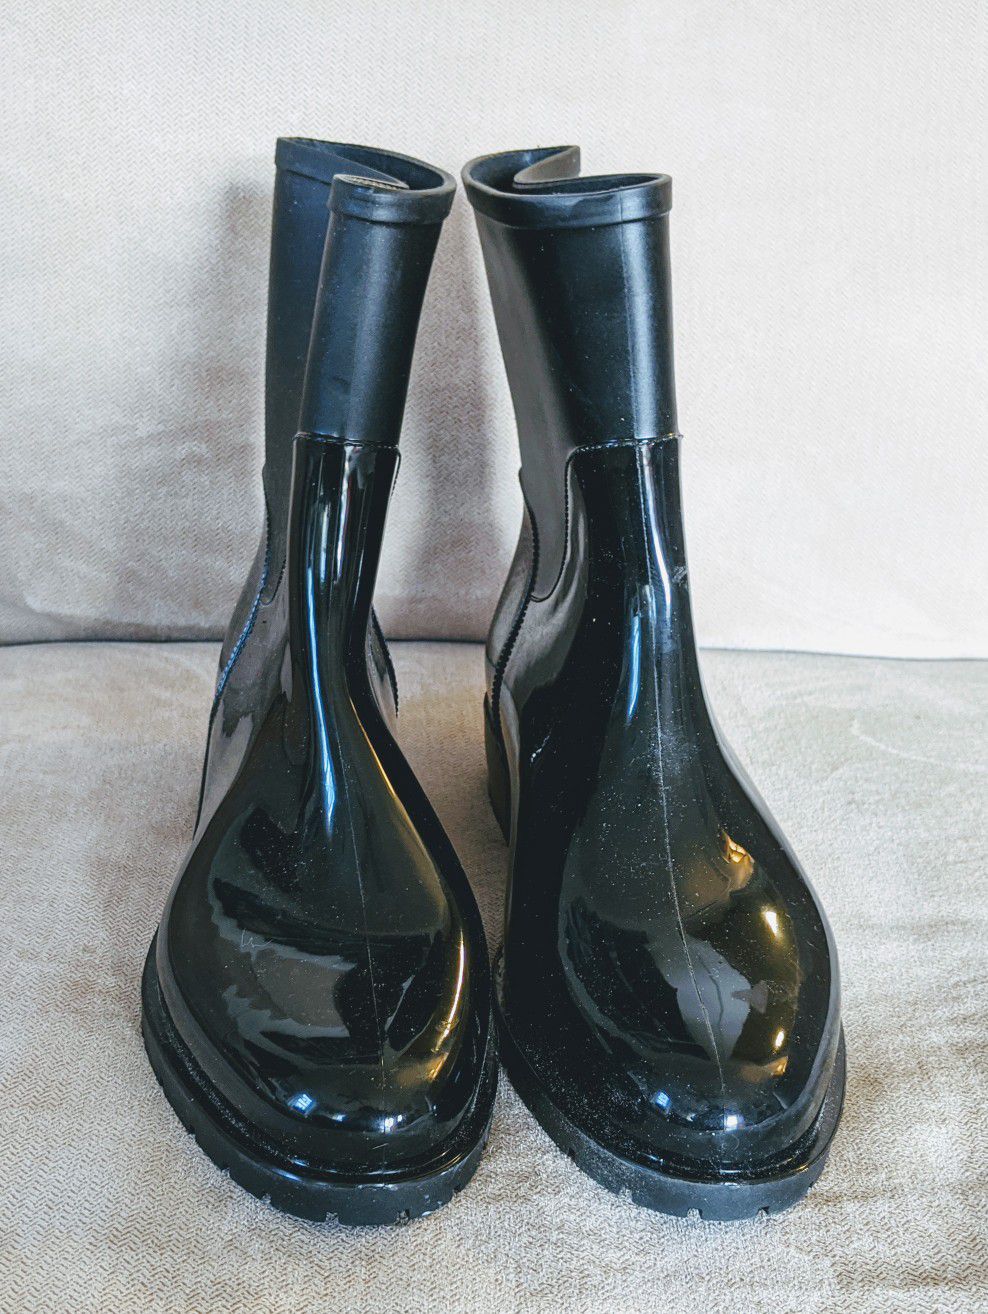 Size 10 women's rain boots